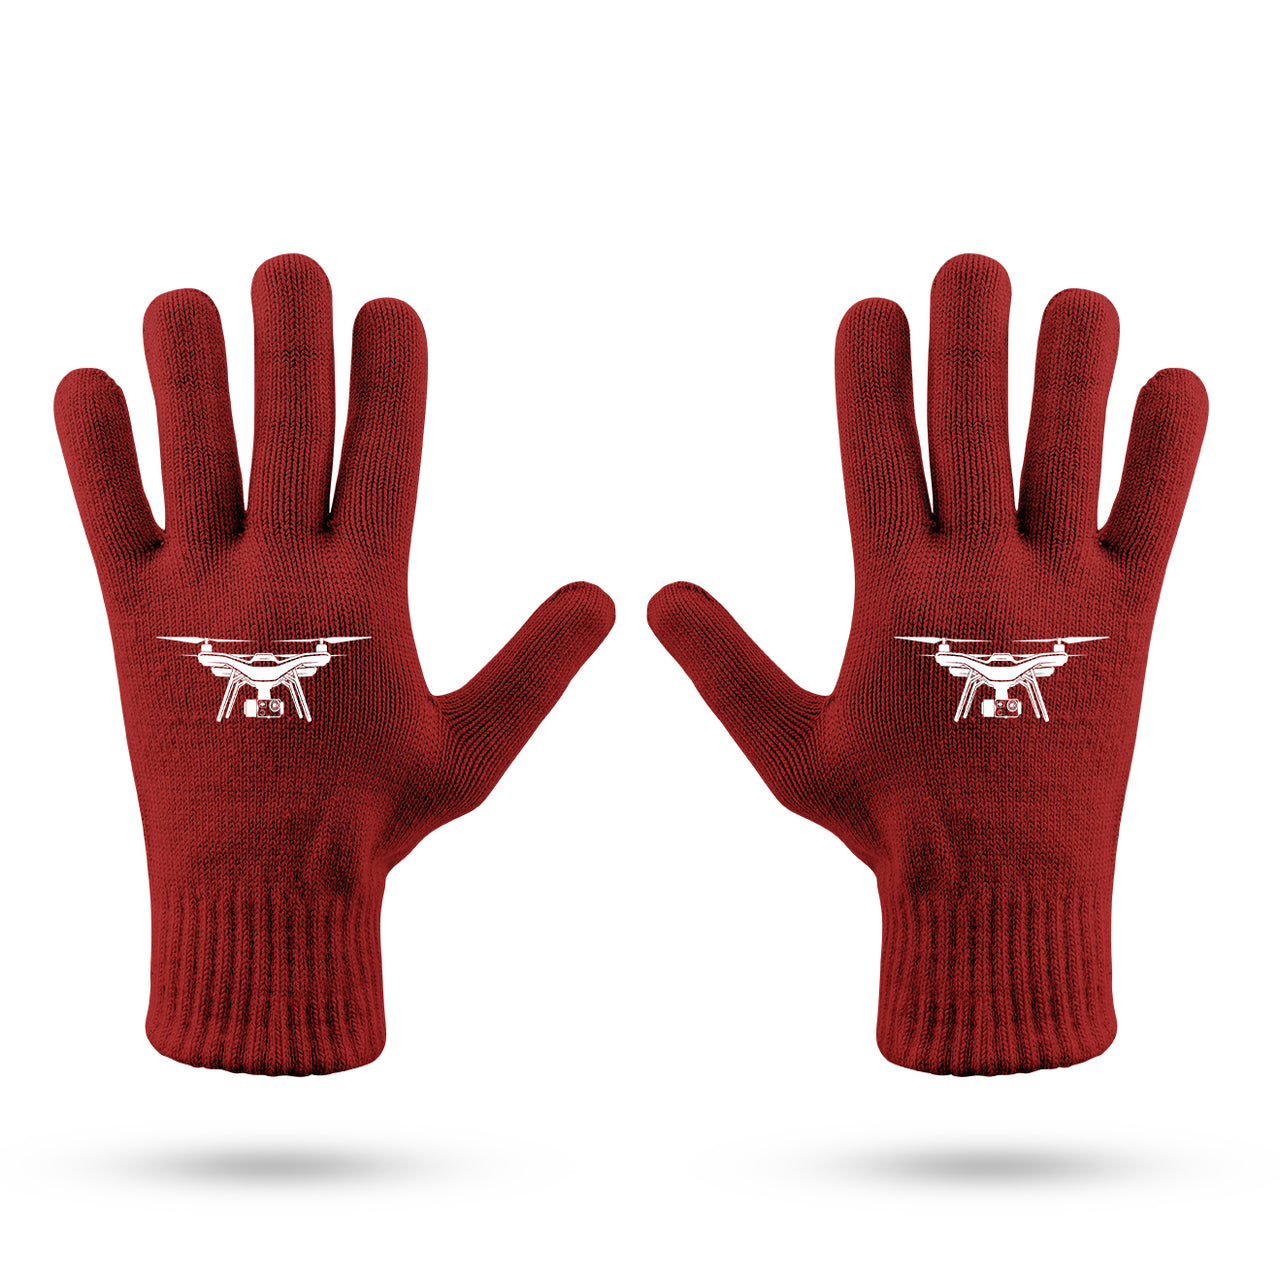 Drone Silhouette Designed Gloves